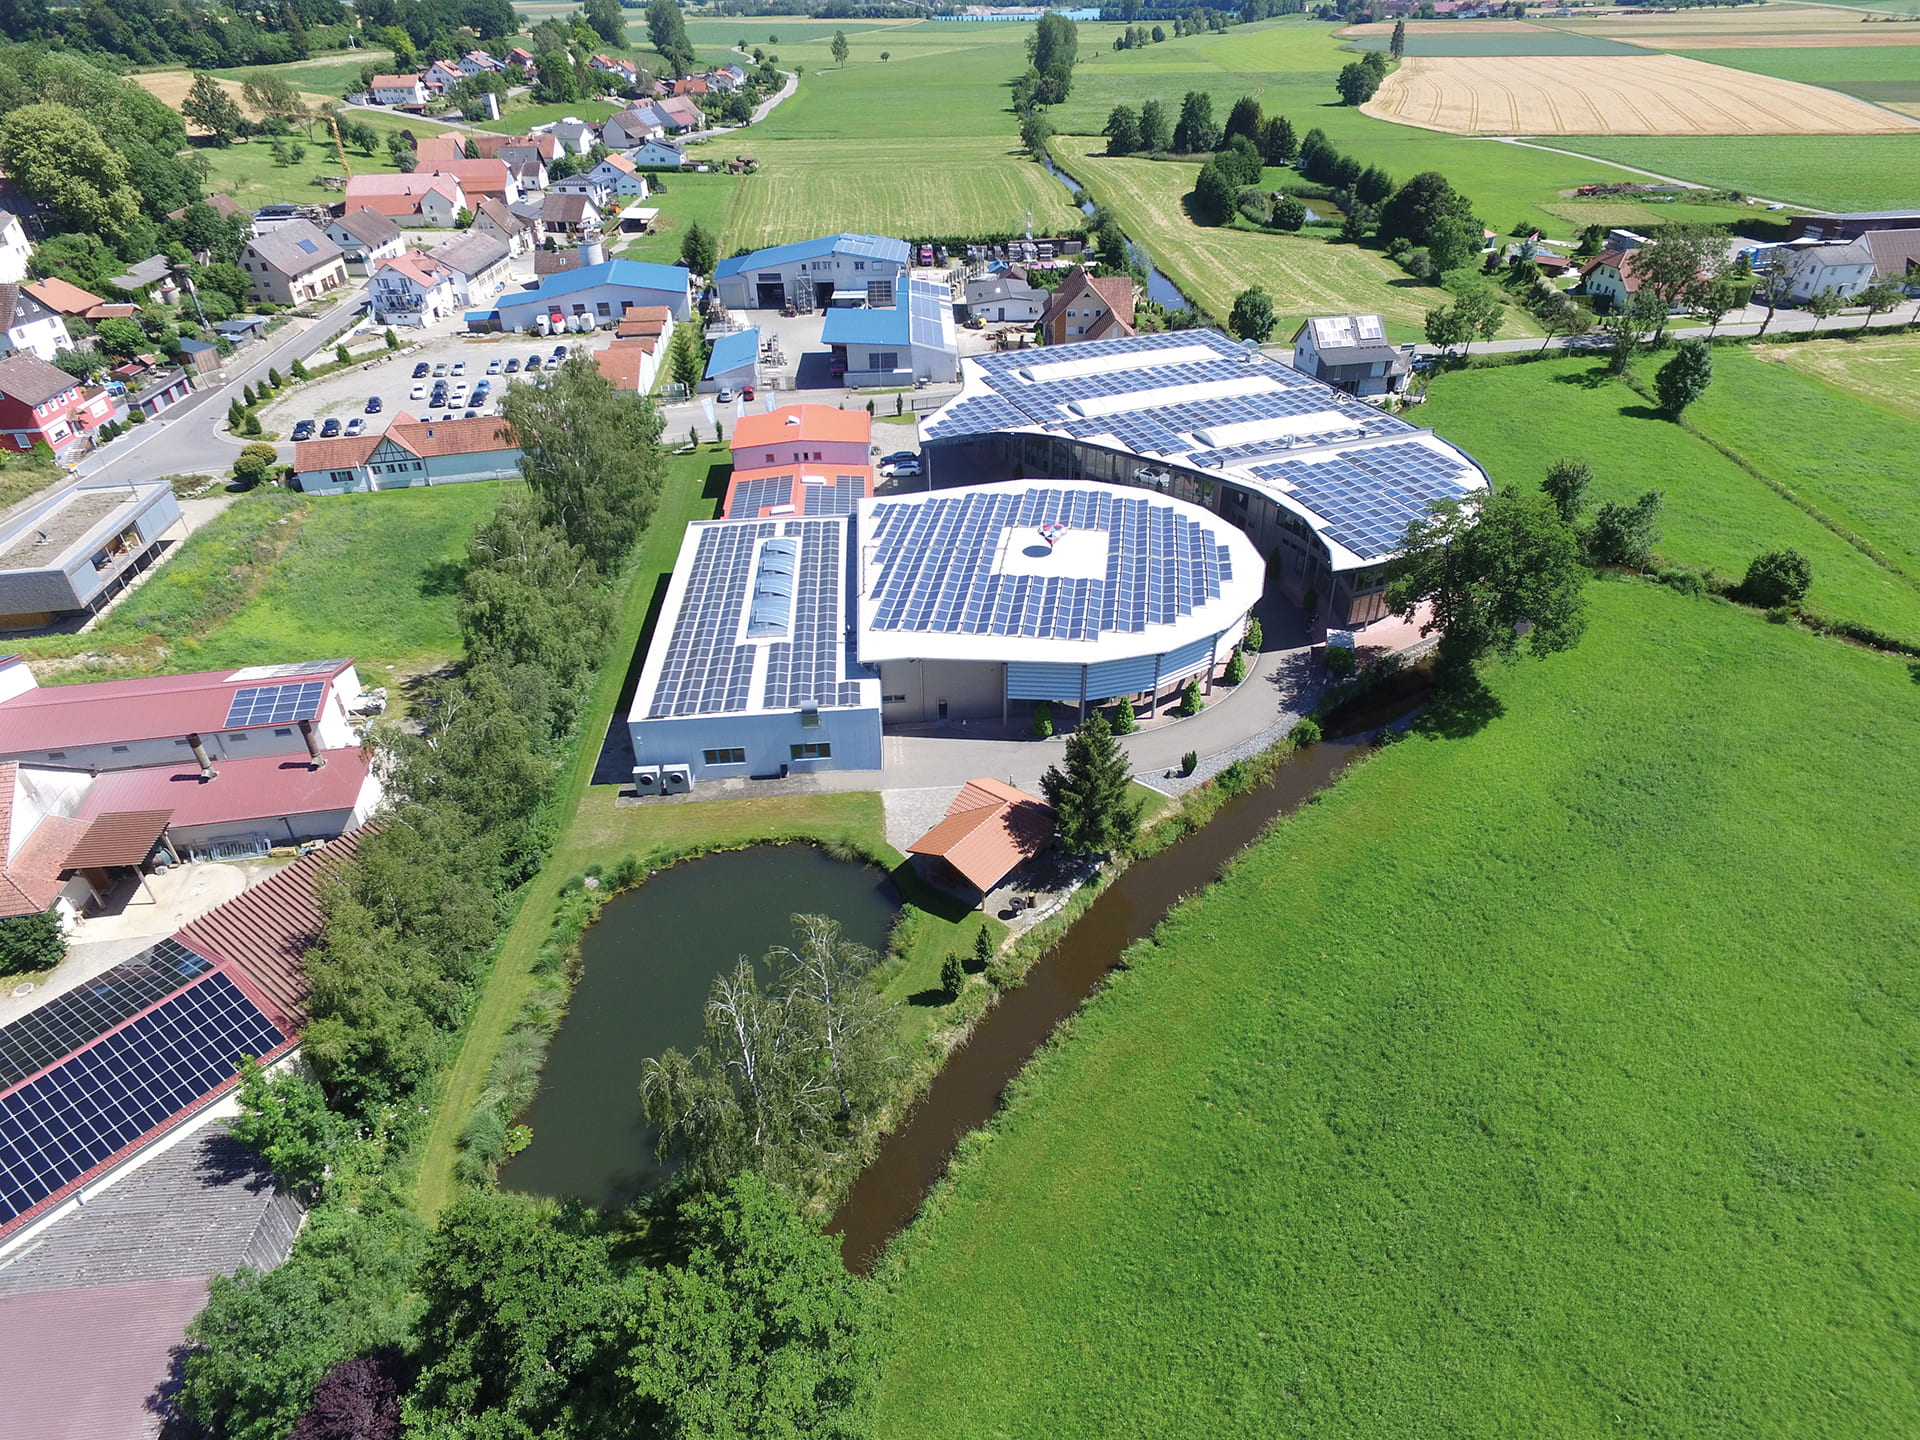 ENPLA-GmbH-Photovoltaik-Referenz-Neher-Ostrach